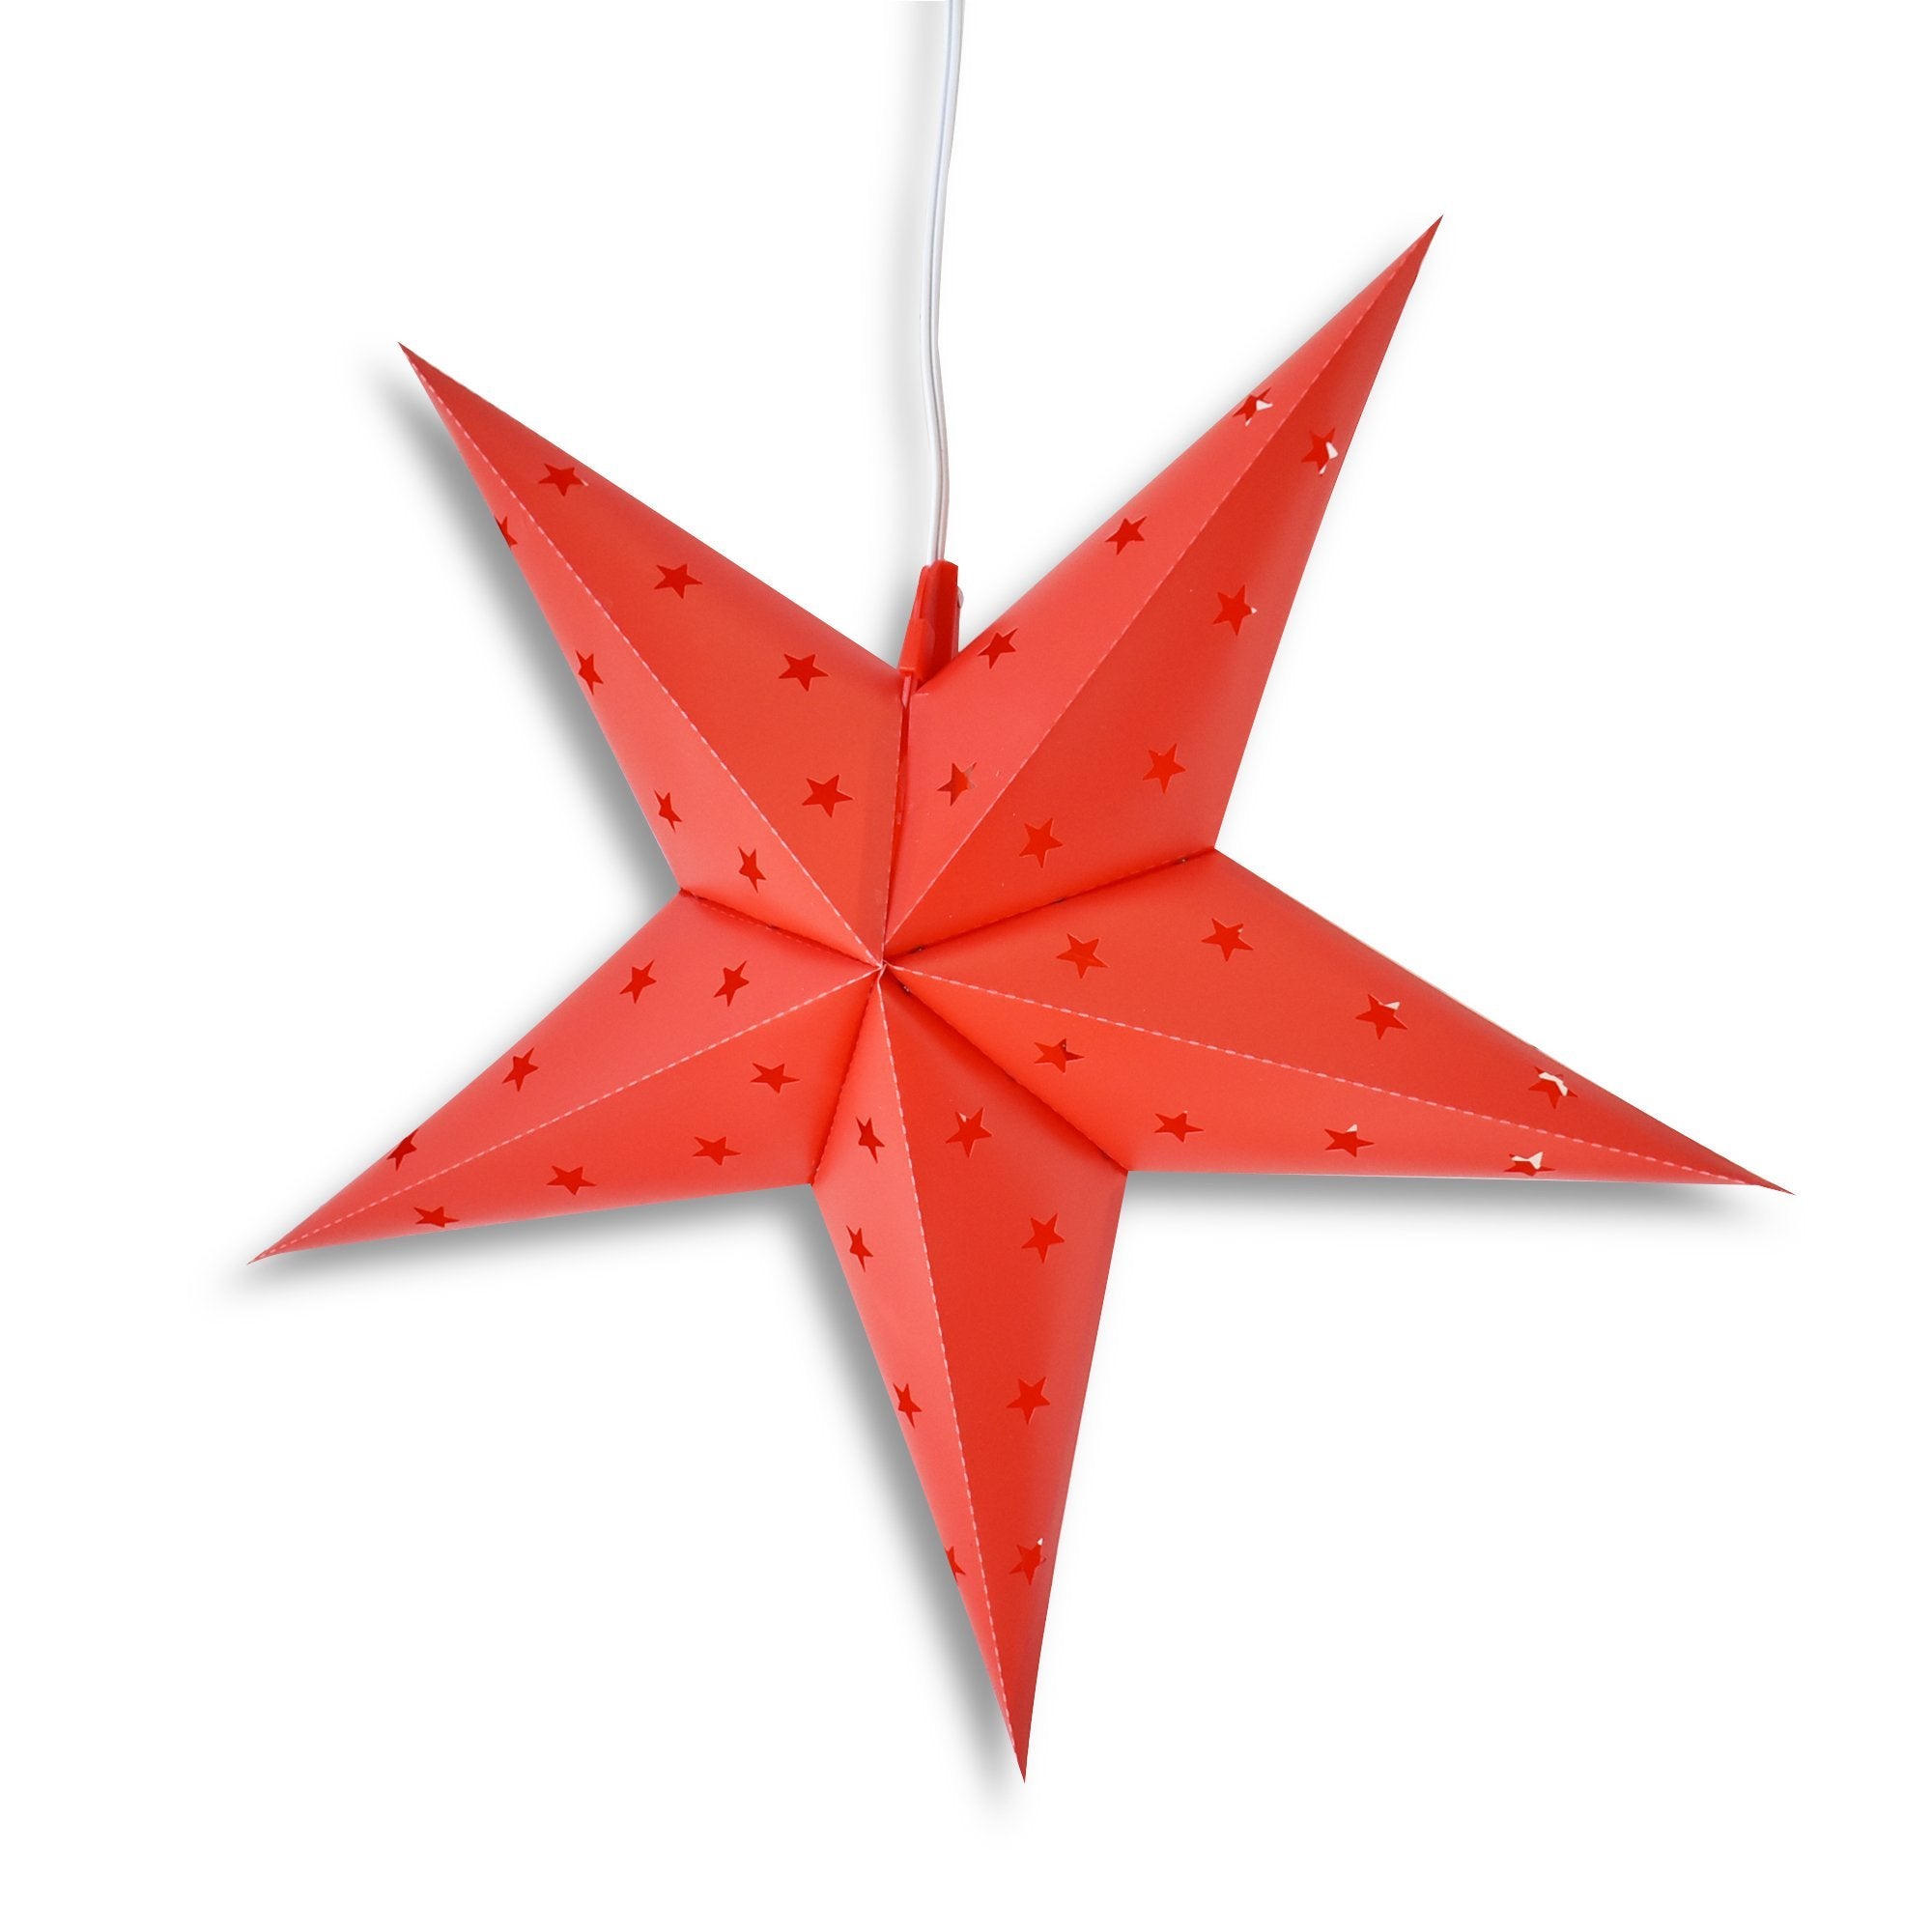 28" Red Weatherproof Star Lantern Lamp, Hanging Decoration (Shade Only)